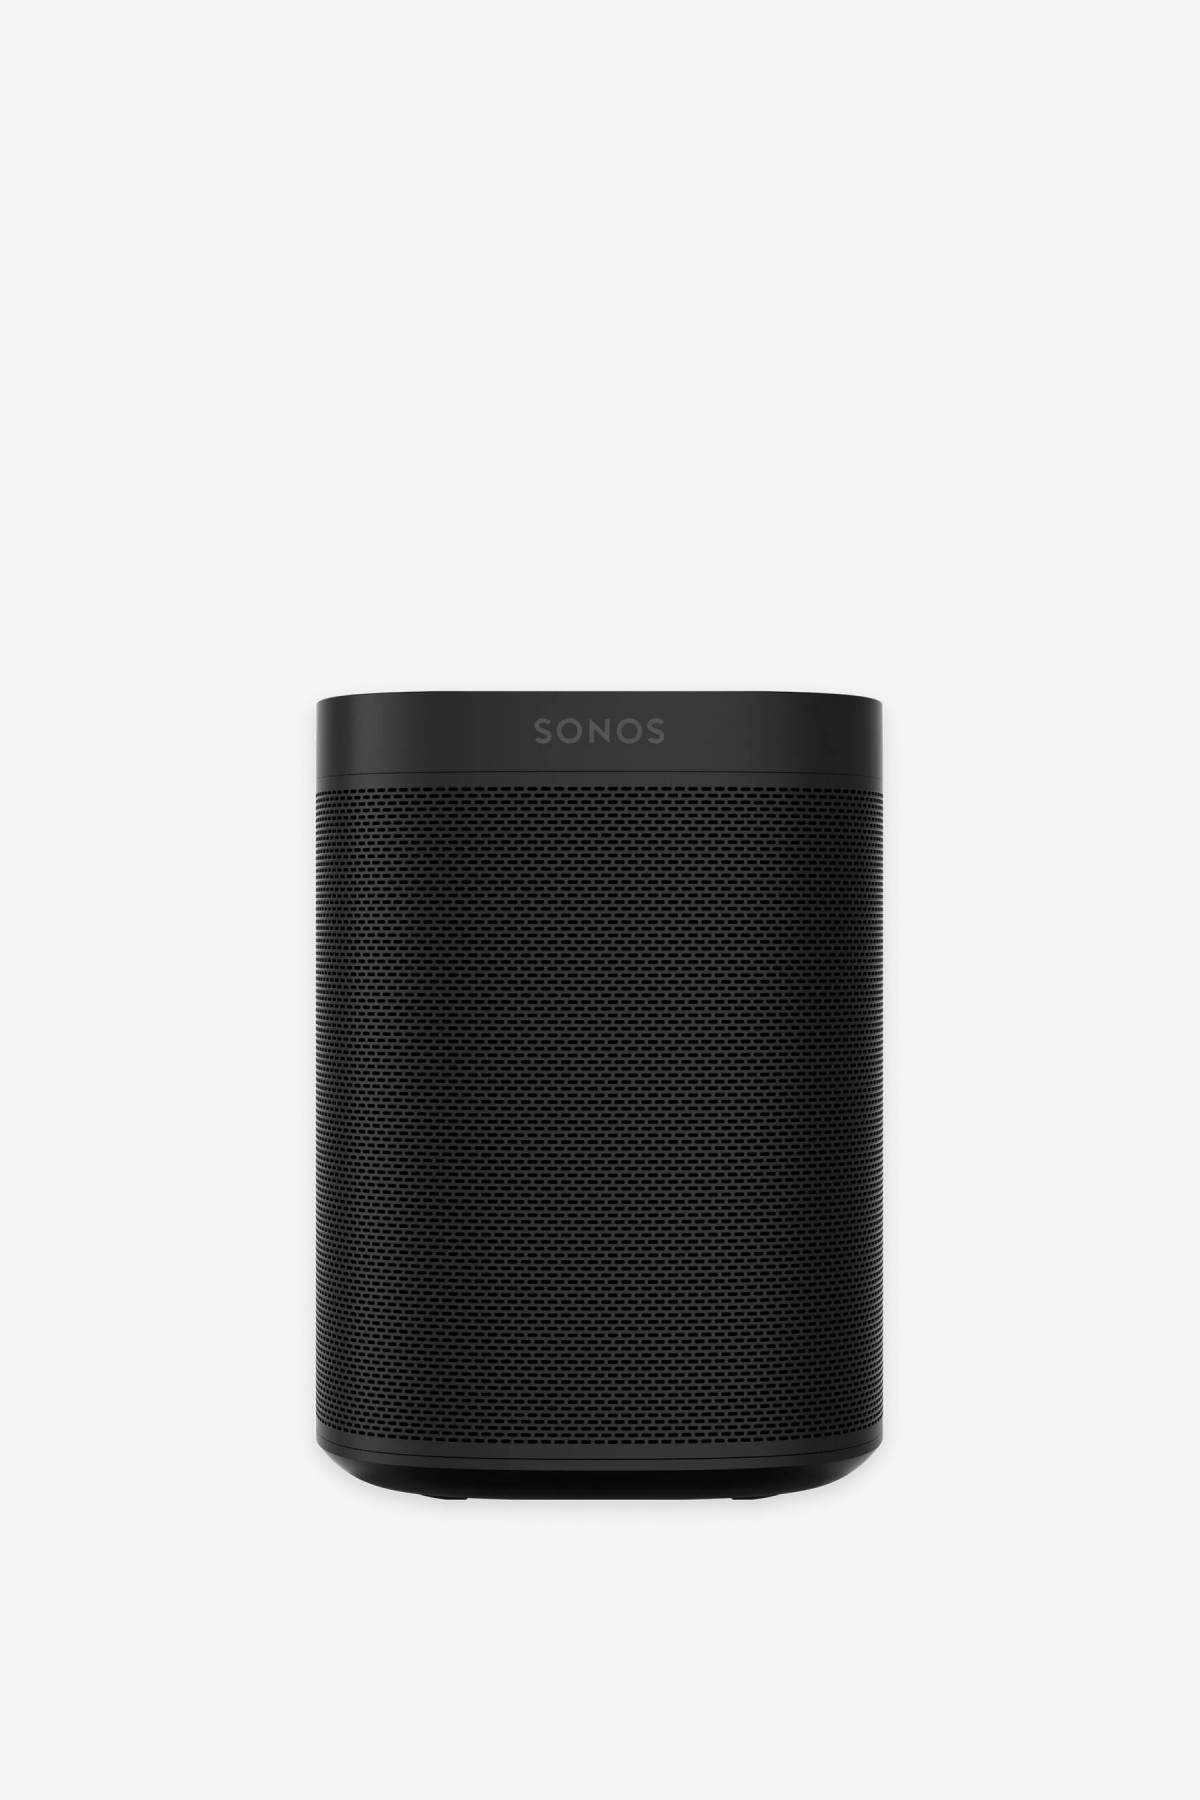 Sonos One SL in Black